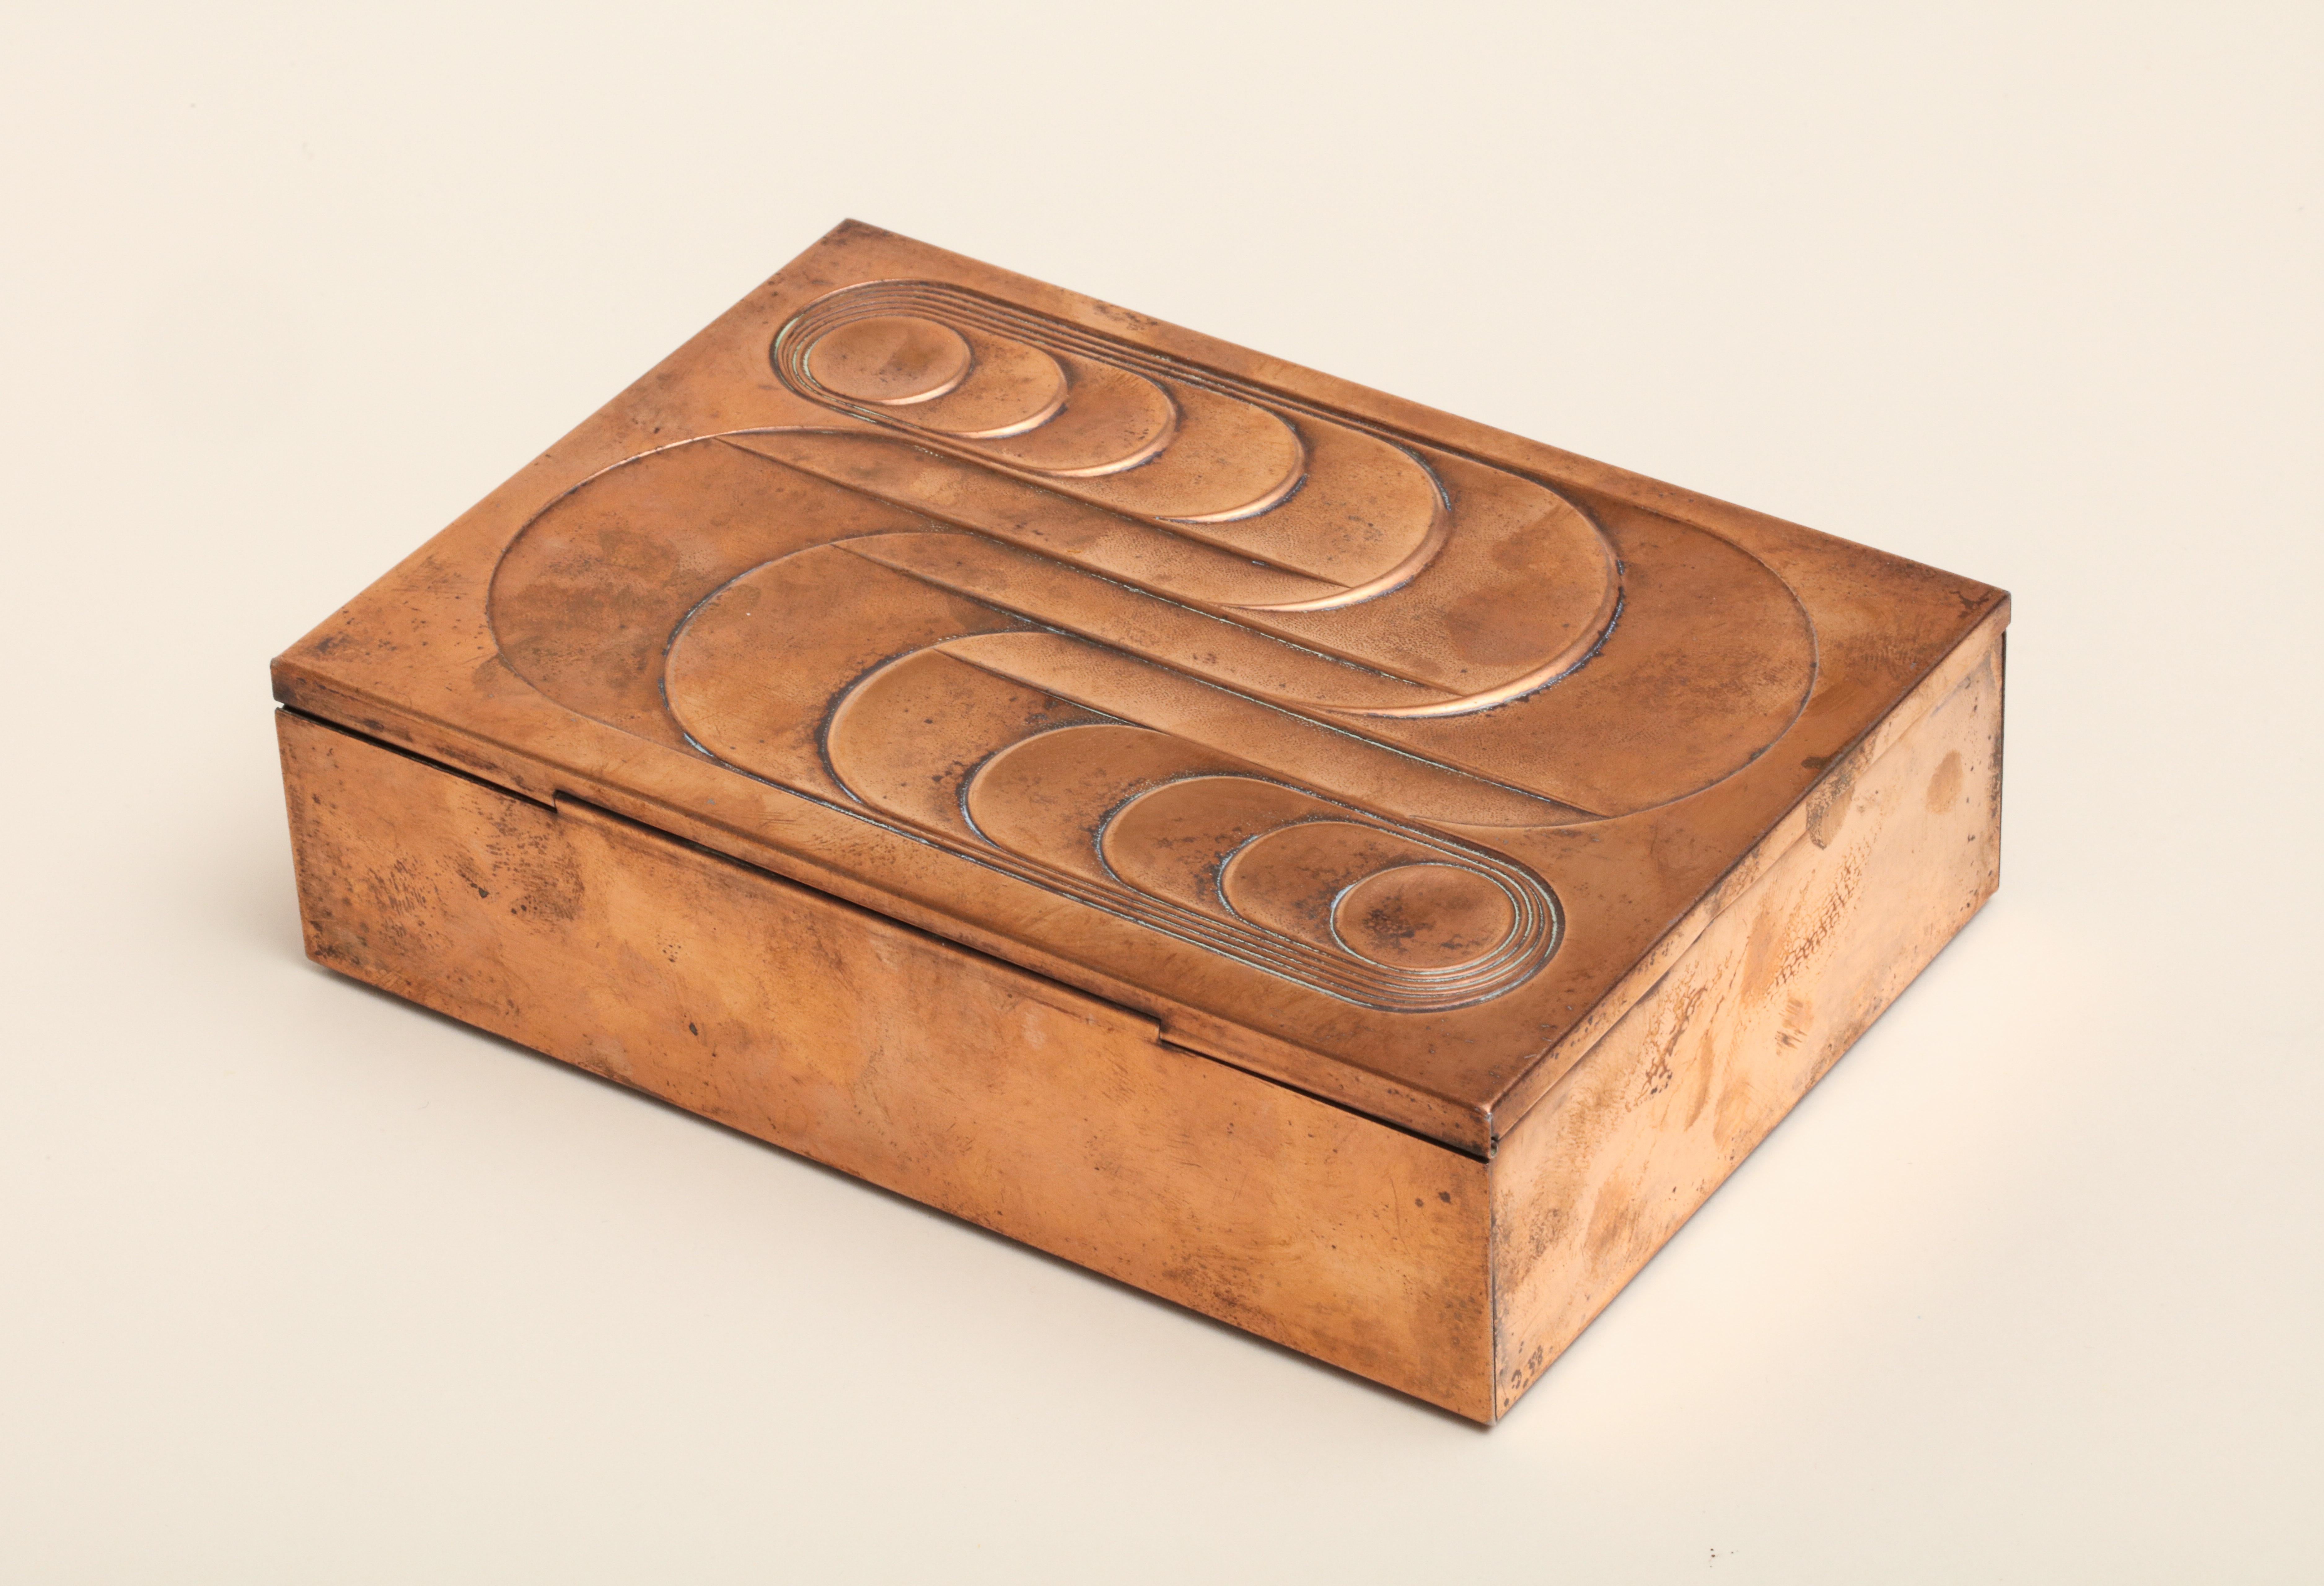 American Art Deco Hinged Copper Box with Geometric Design (amerikanisch)